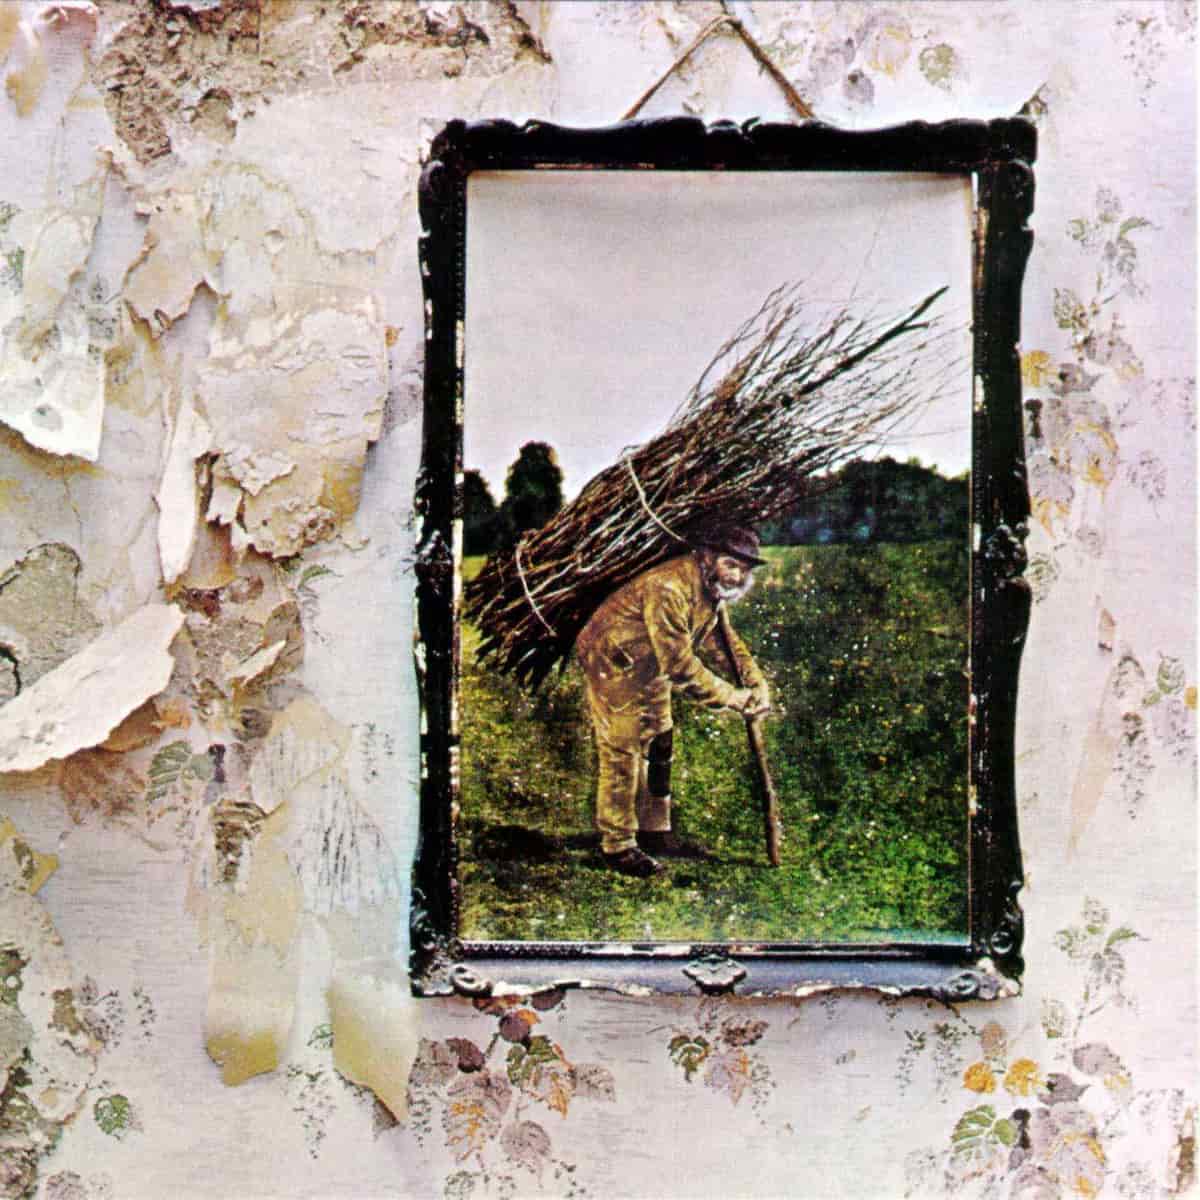 Led Zeppelin IV cover - Land Of The Rising Son